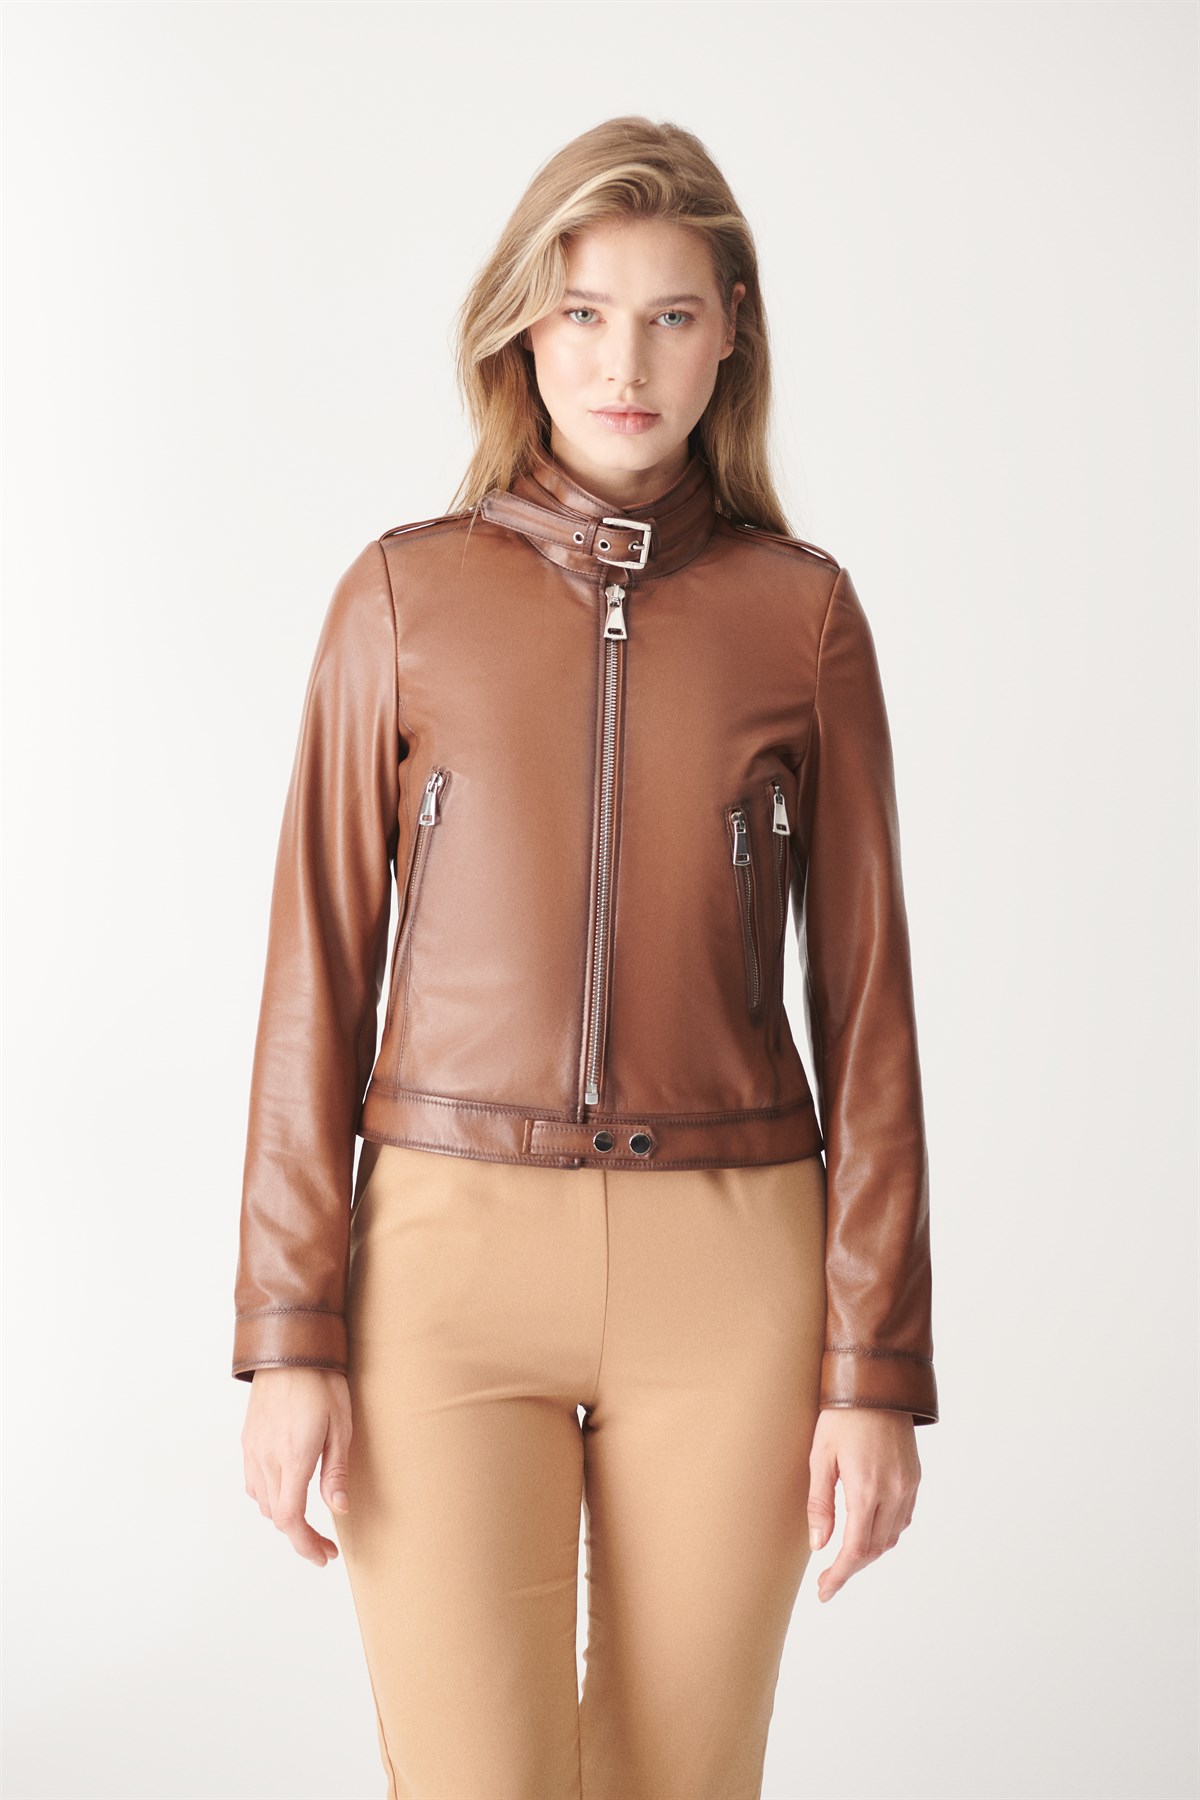 KAYLA Brown Black Sport Leather Jacket | Women's Leather Jacket Models